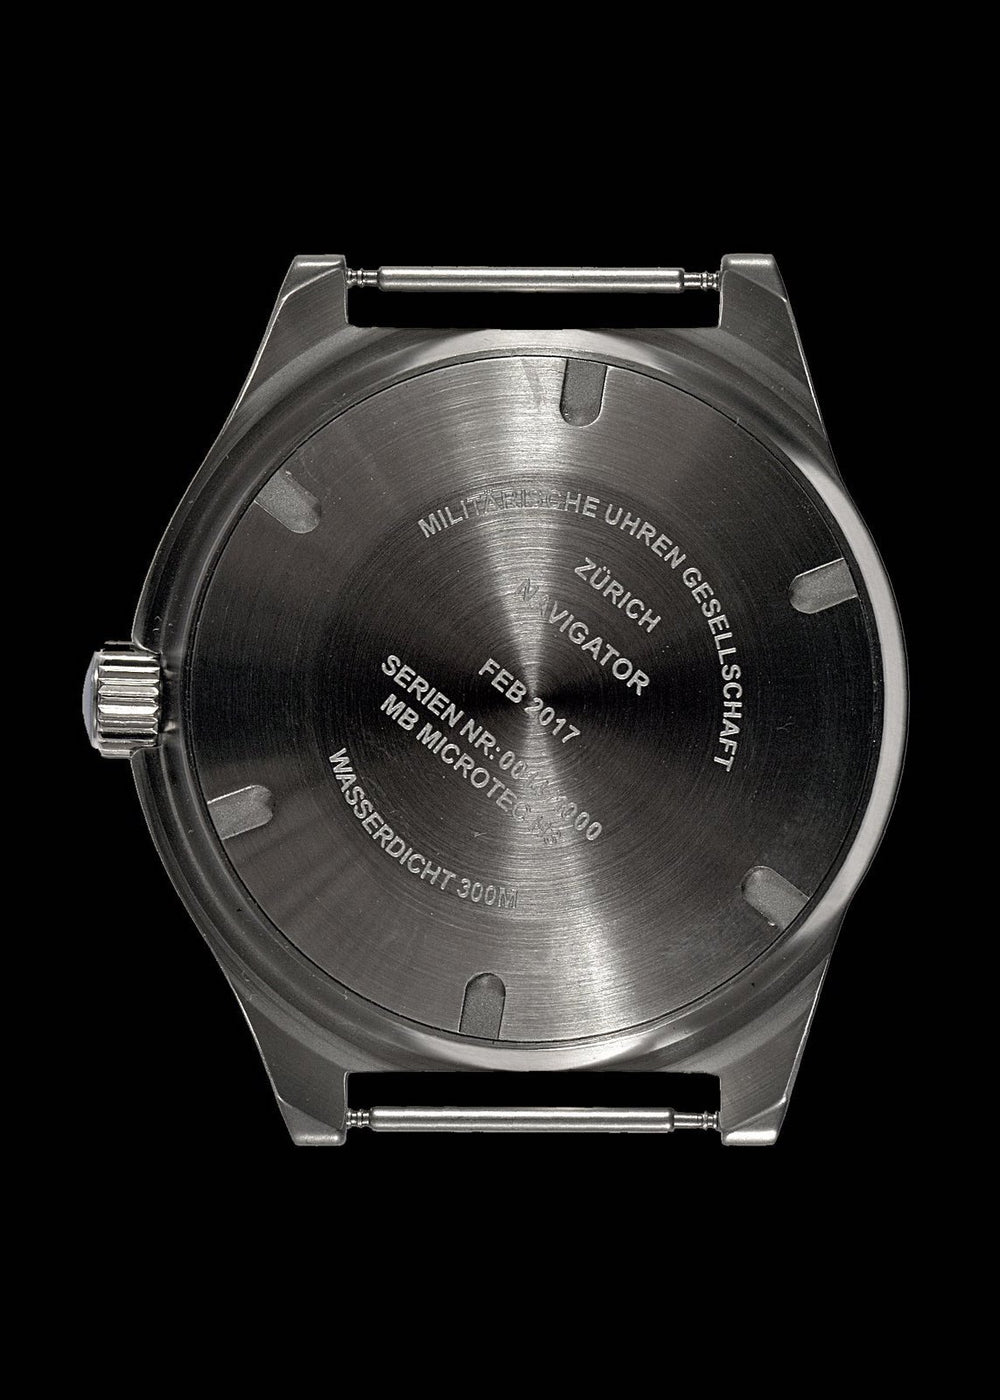 MWC Classic Navigator Watch - 300m Water Resistant Stainless Steel Tritium GTLS Navigator Watch (Unbranded)